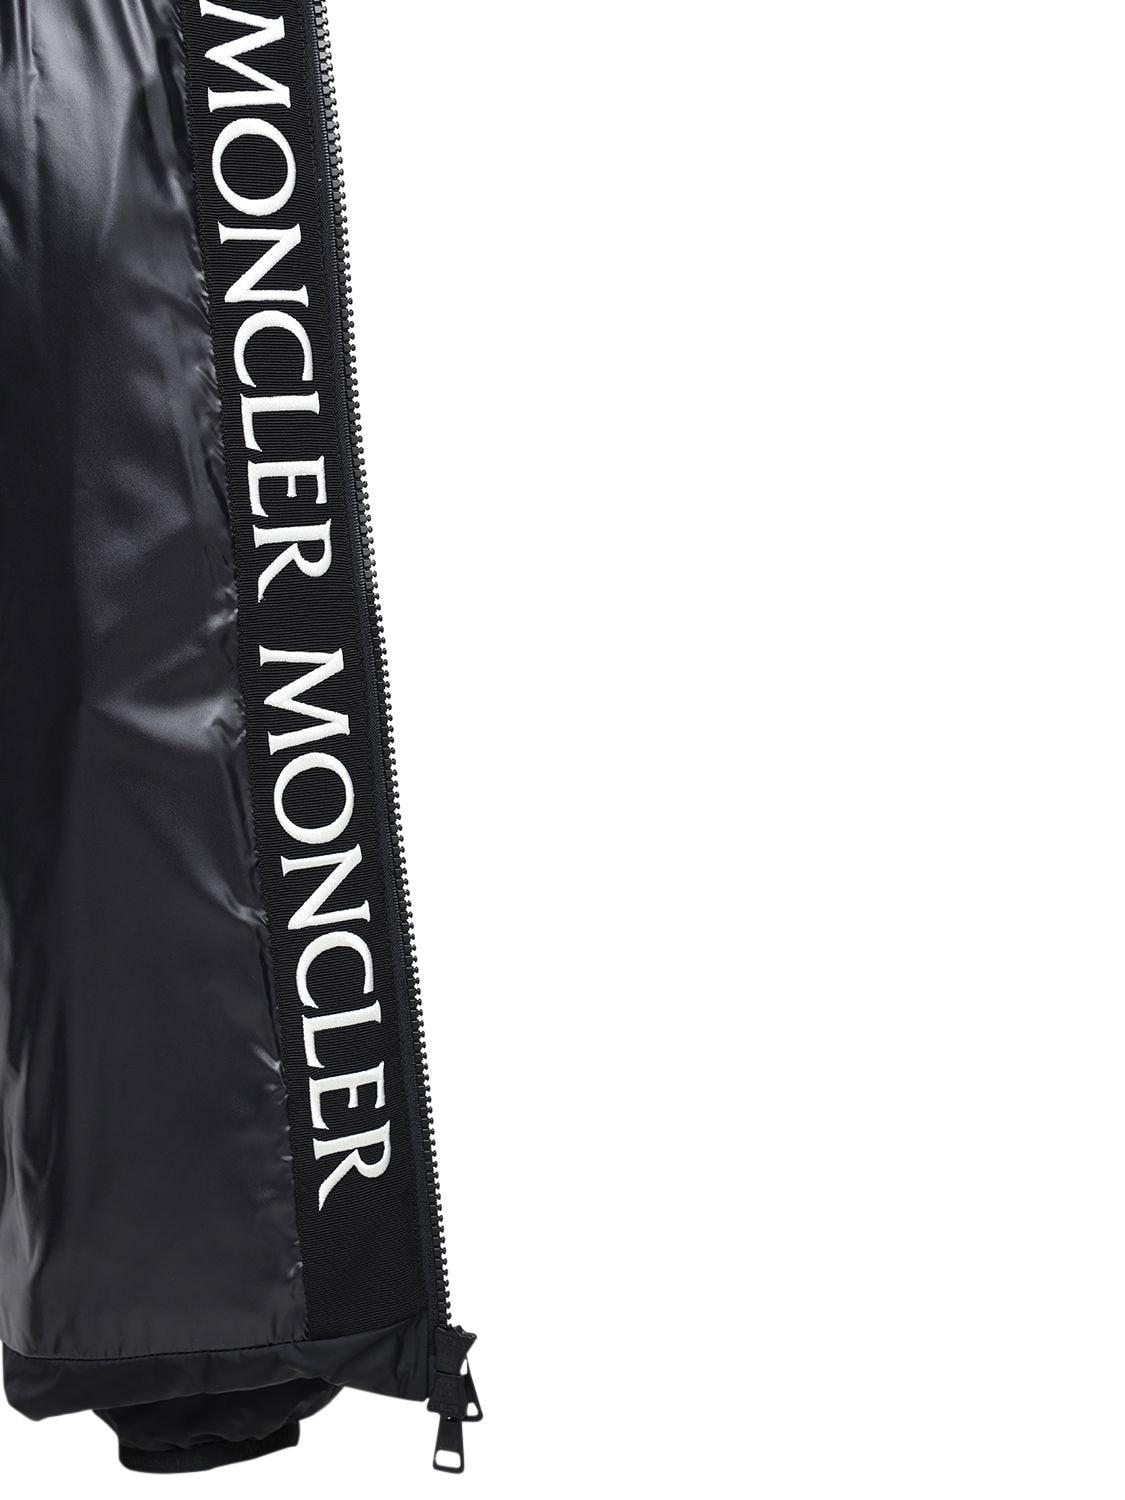 Moncler Synthetic Montcla Down Jacket in Black for Men - Save 16 